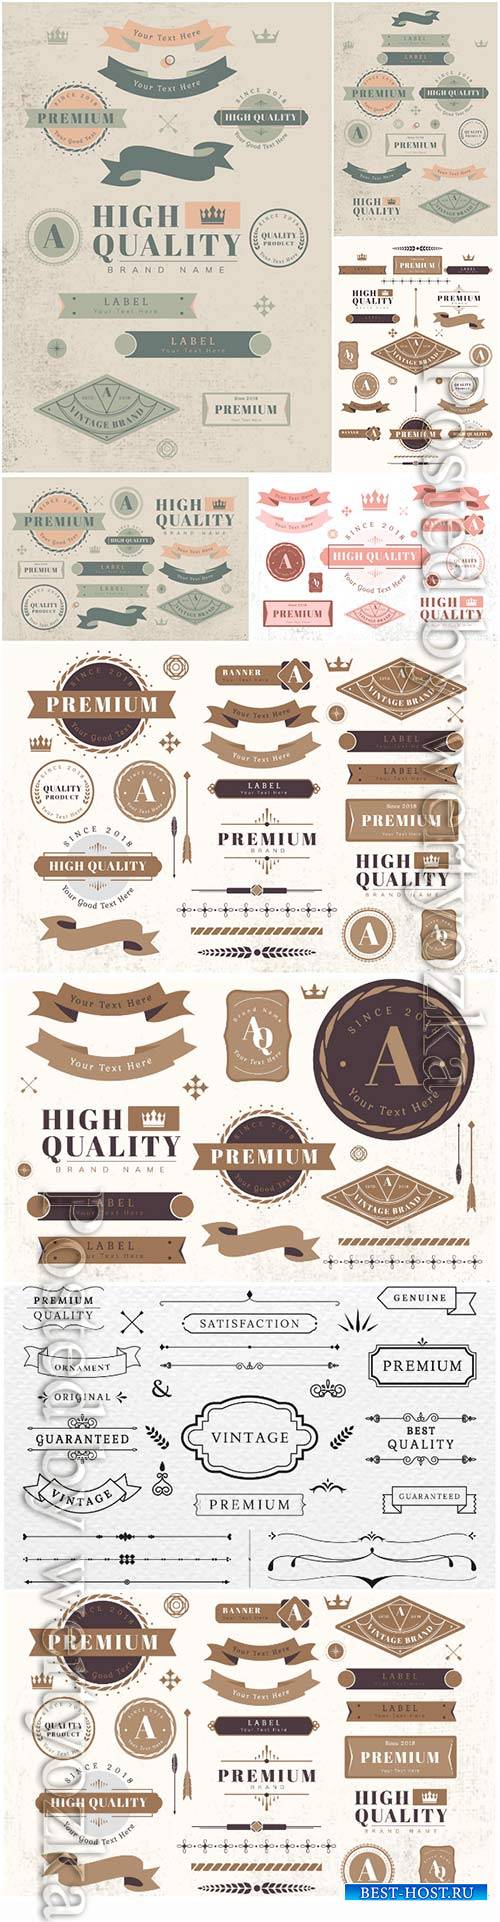 Vintage labels and badges decorative vector elements